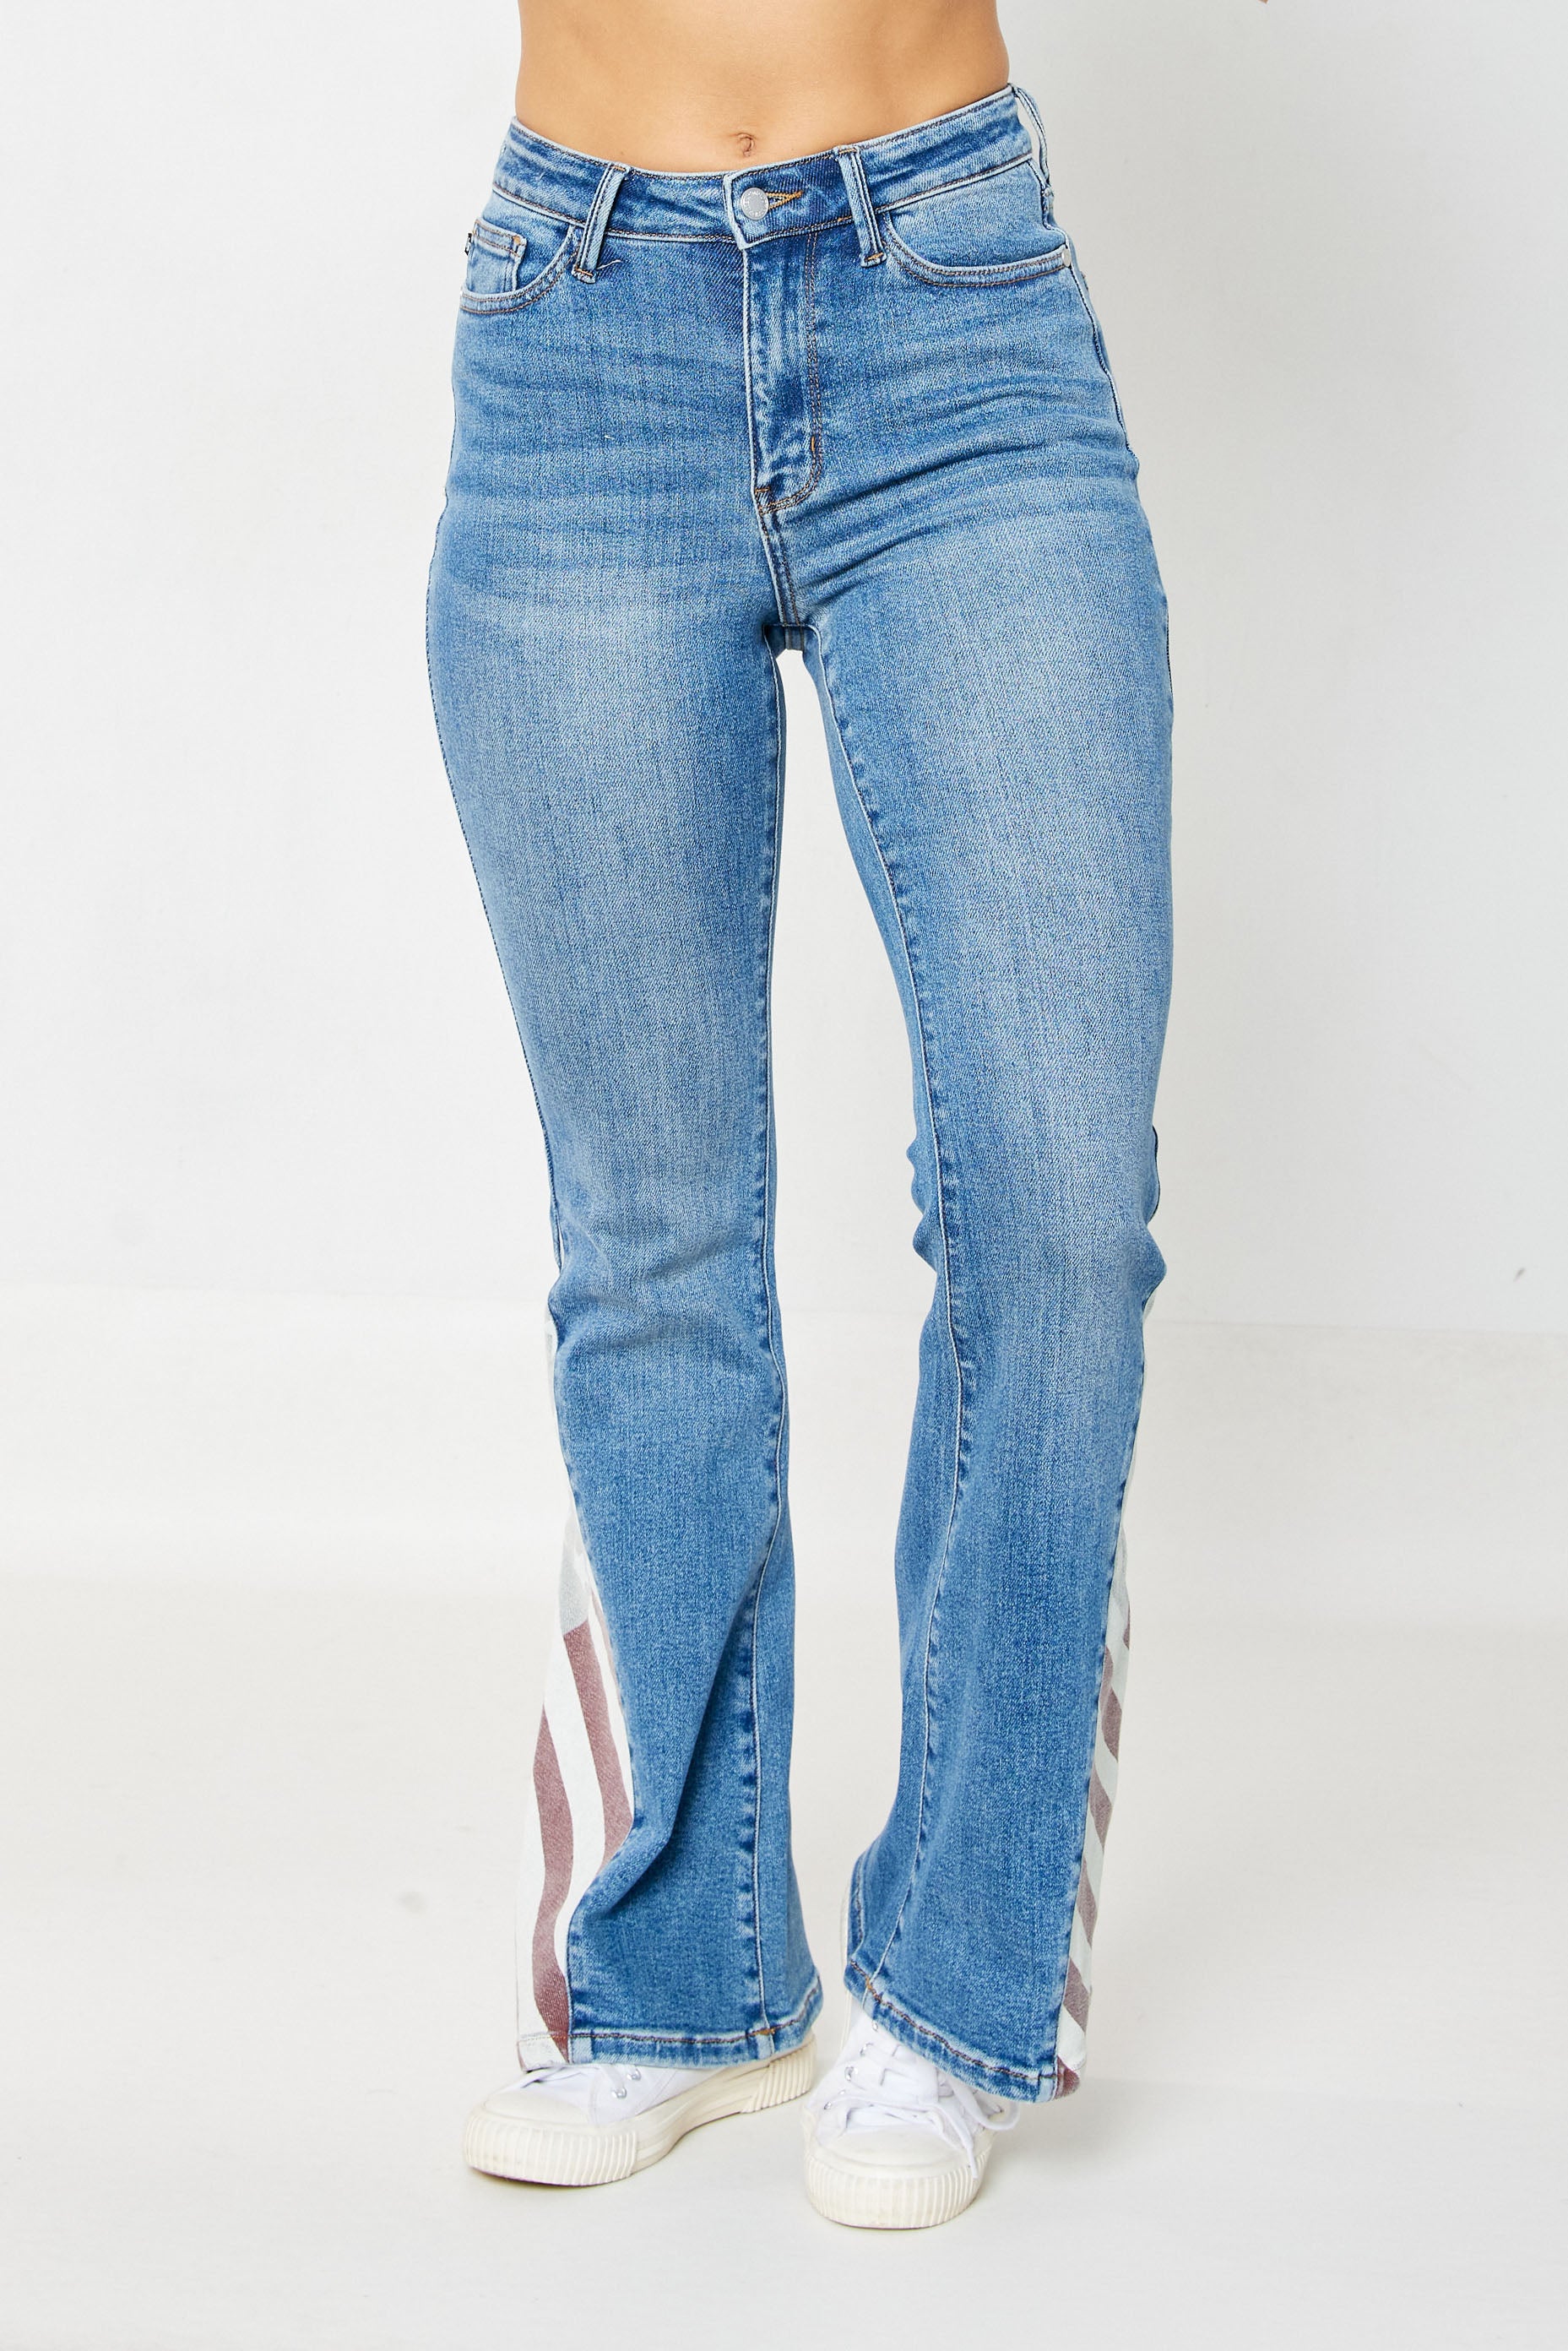 Judy Blue Jeans 88659